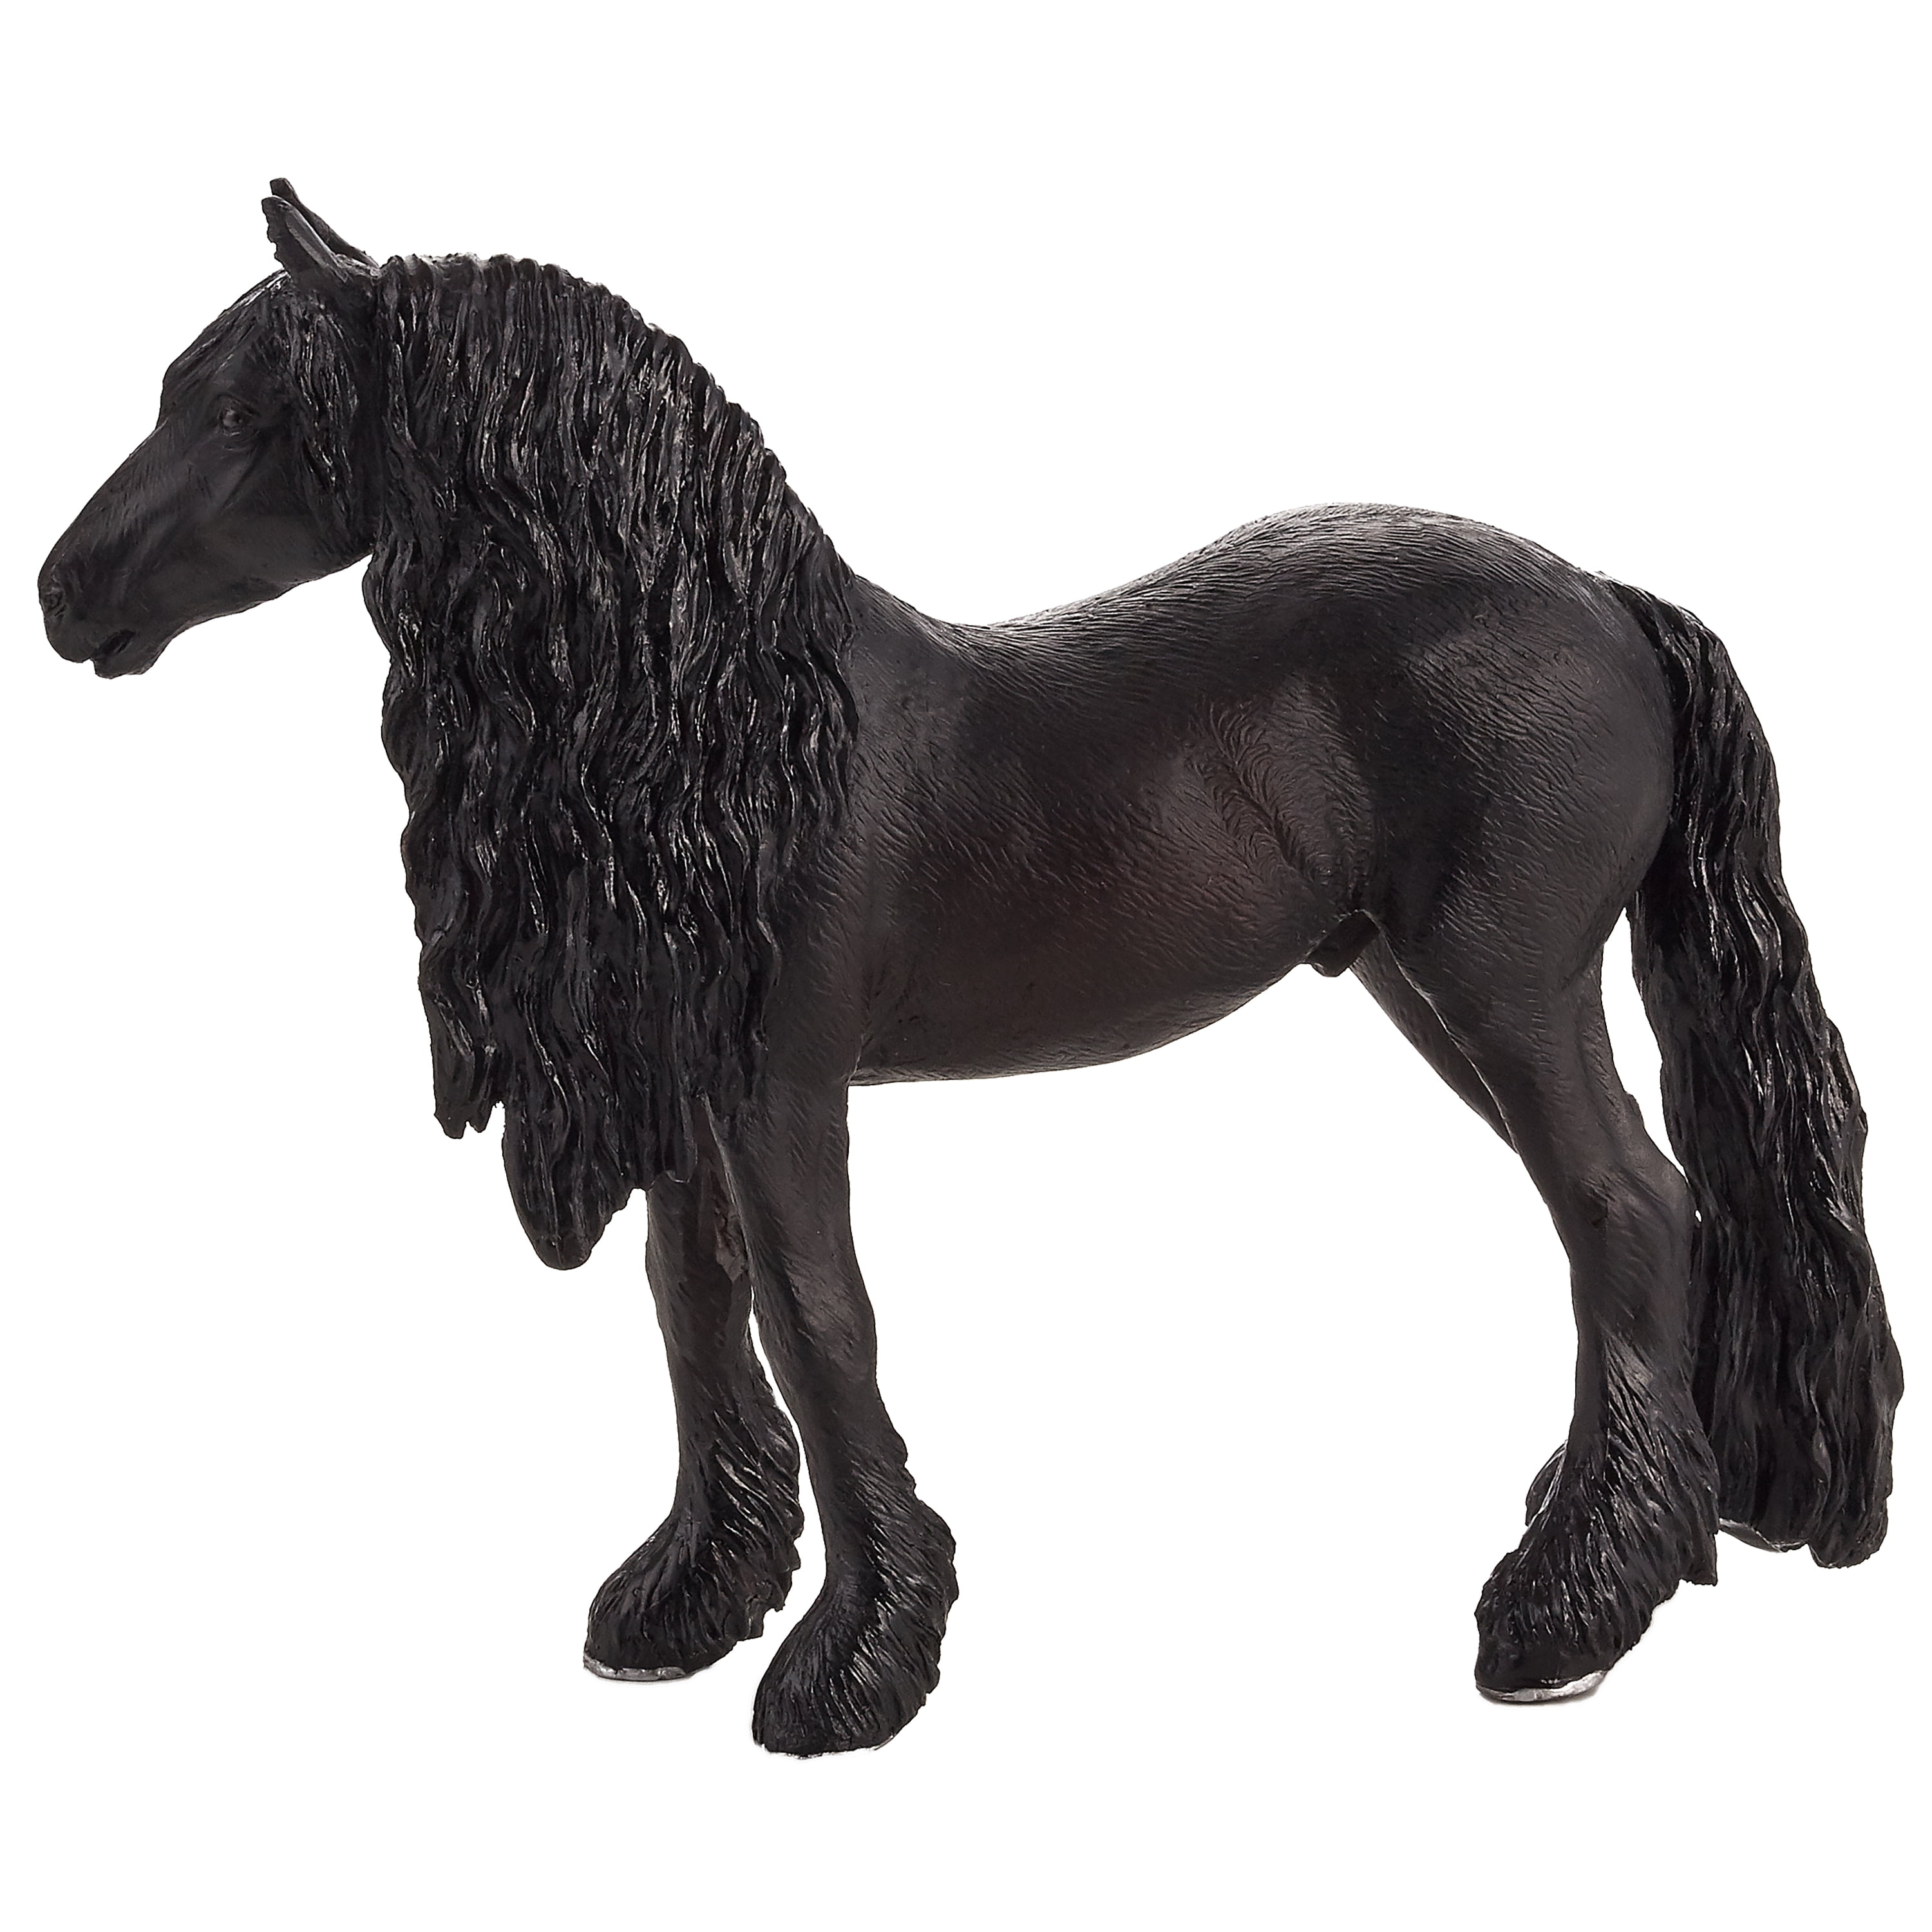 Details about   Mojo FRIESIAN MARE HORSE toy model figure kid girls plastic animal farm figurine 